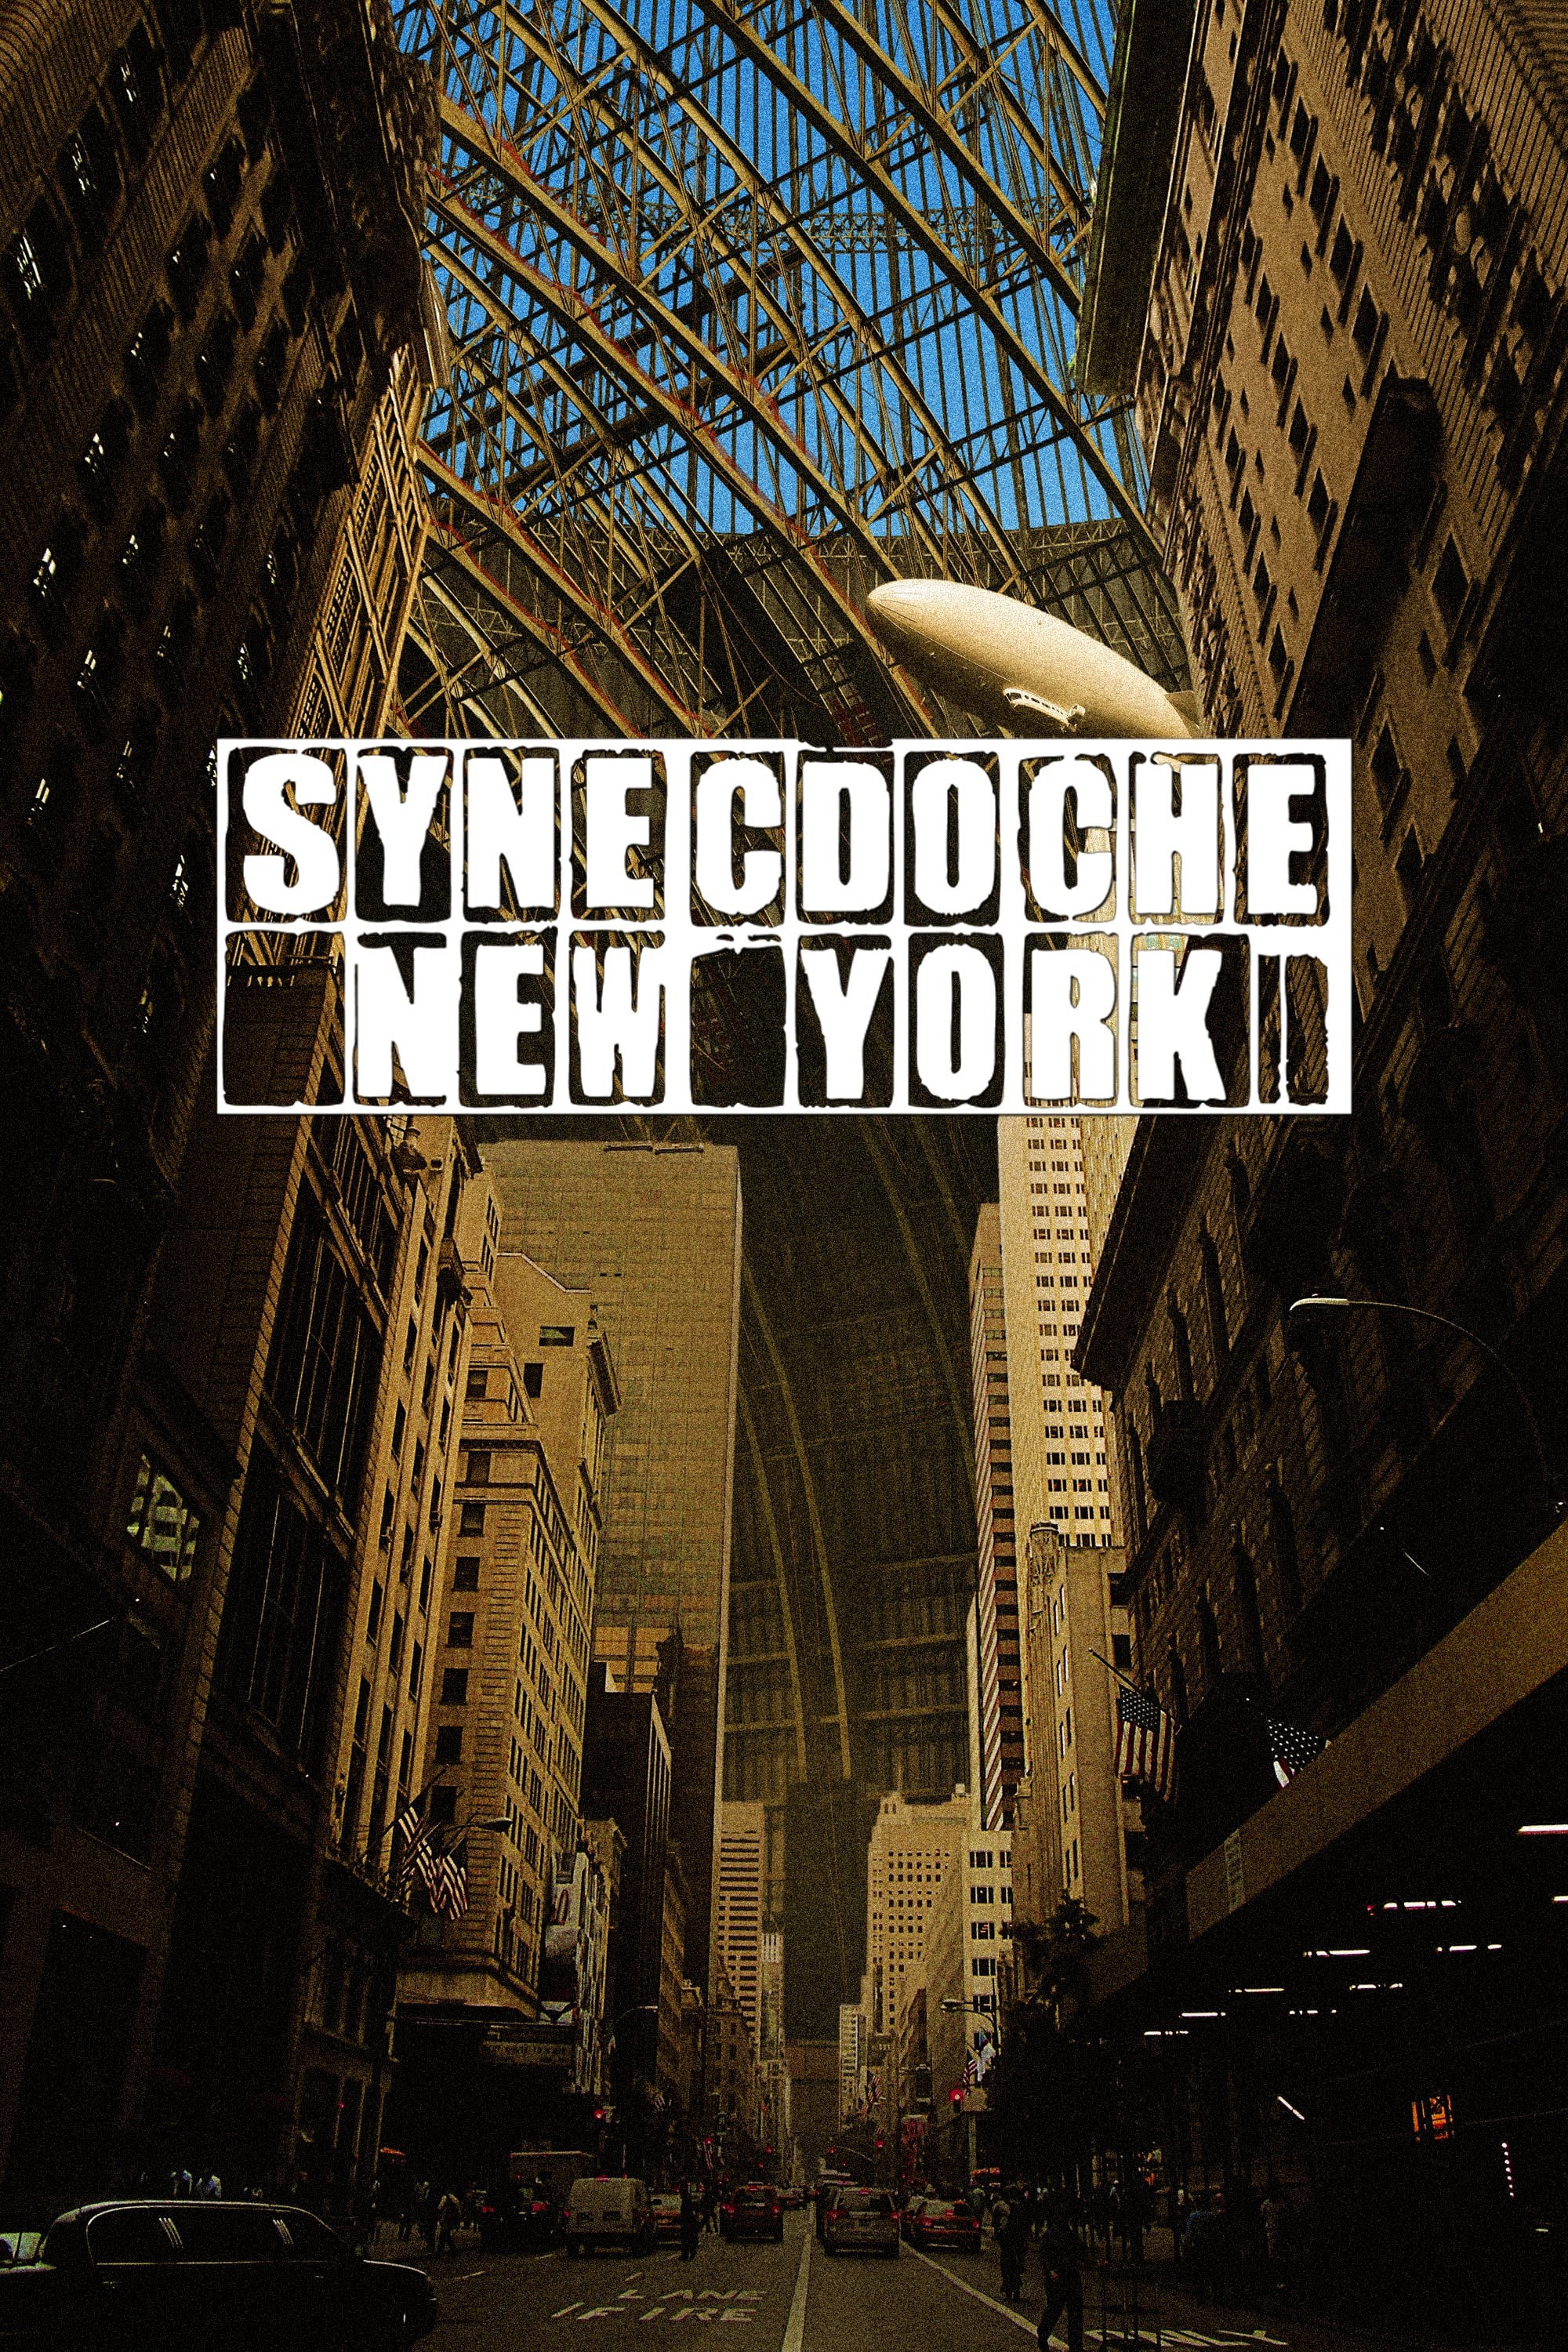 Synecdoche, New York 2008